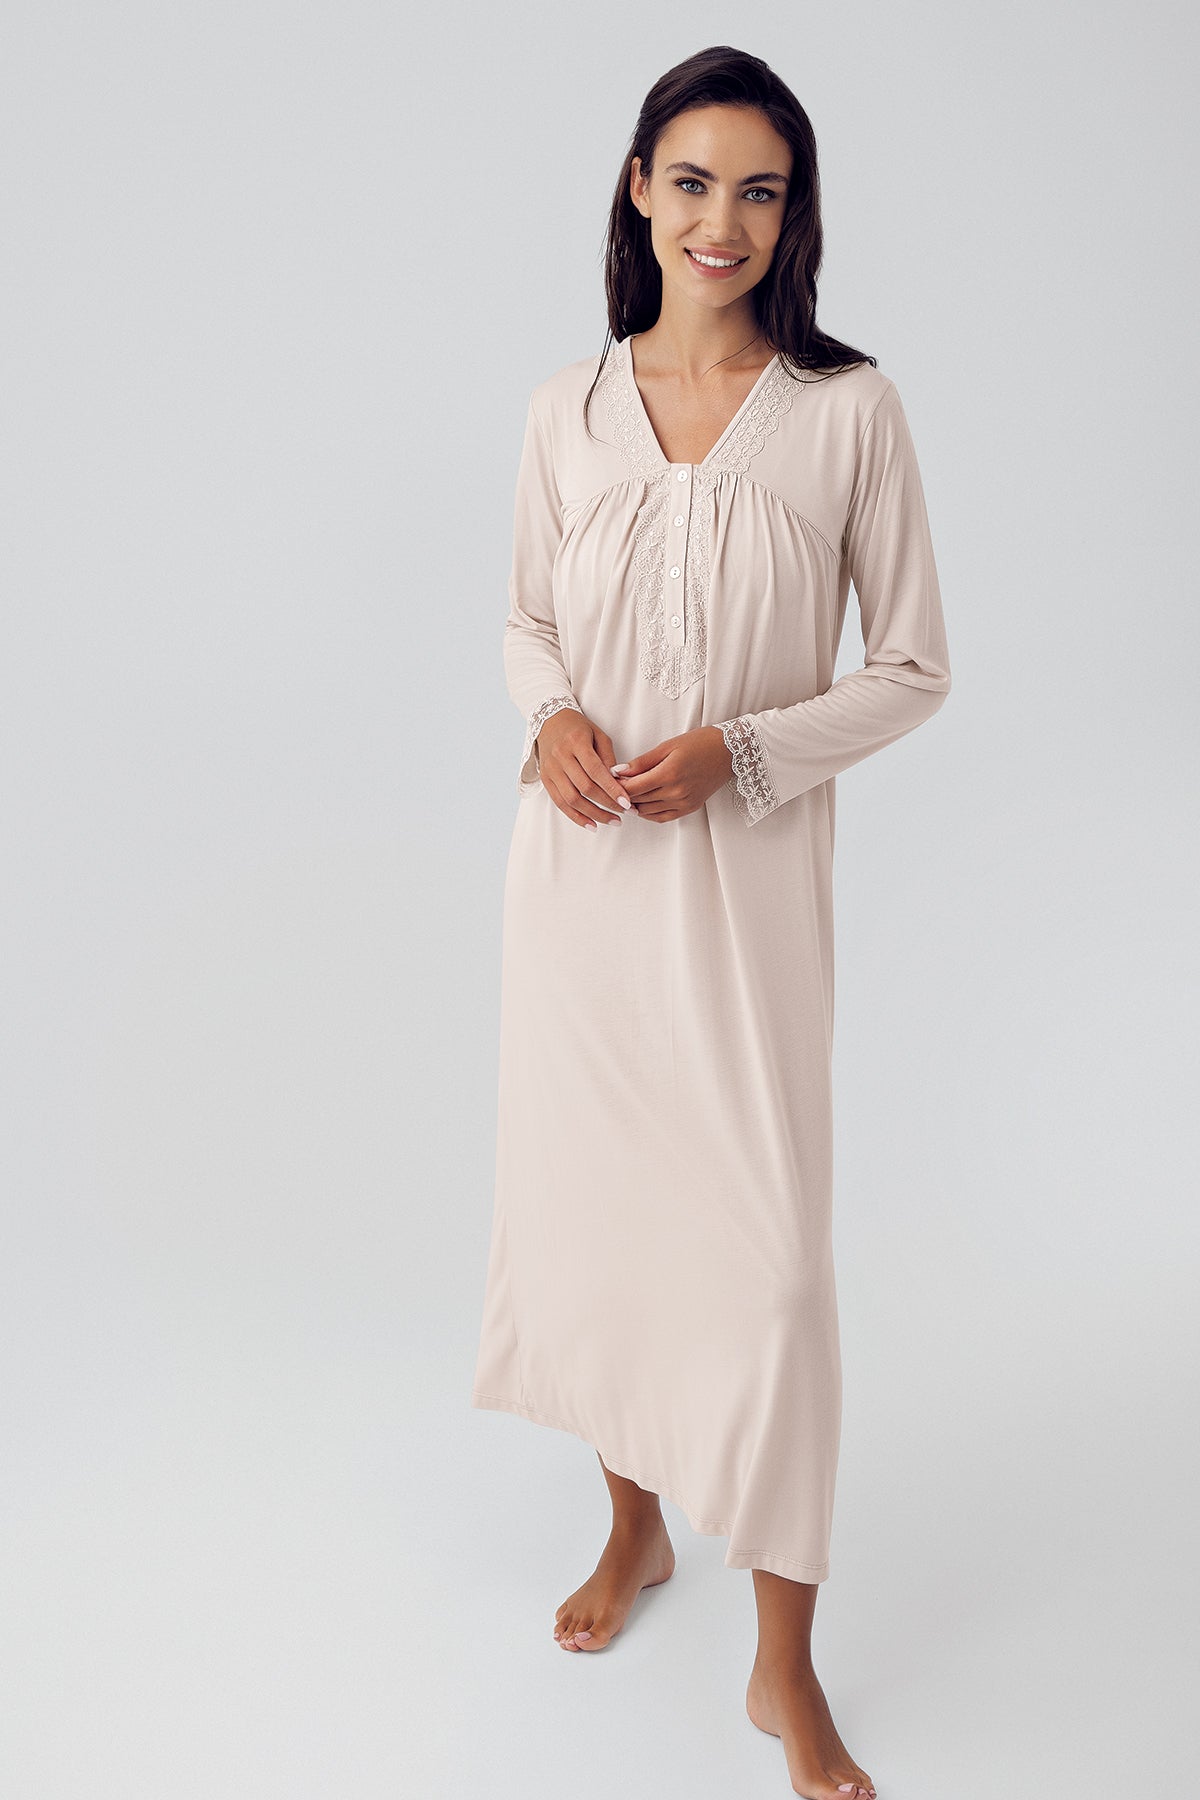 Lace Sleeve Plus Size Maternity & Nursing Nightgown Beige - 15120